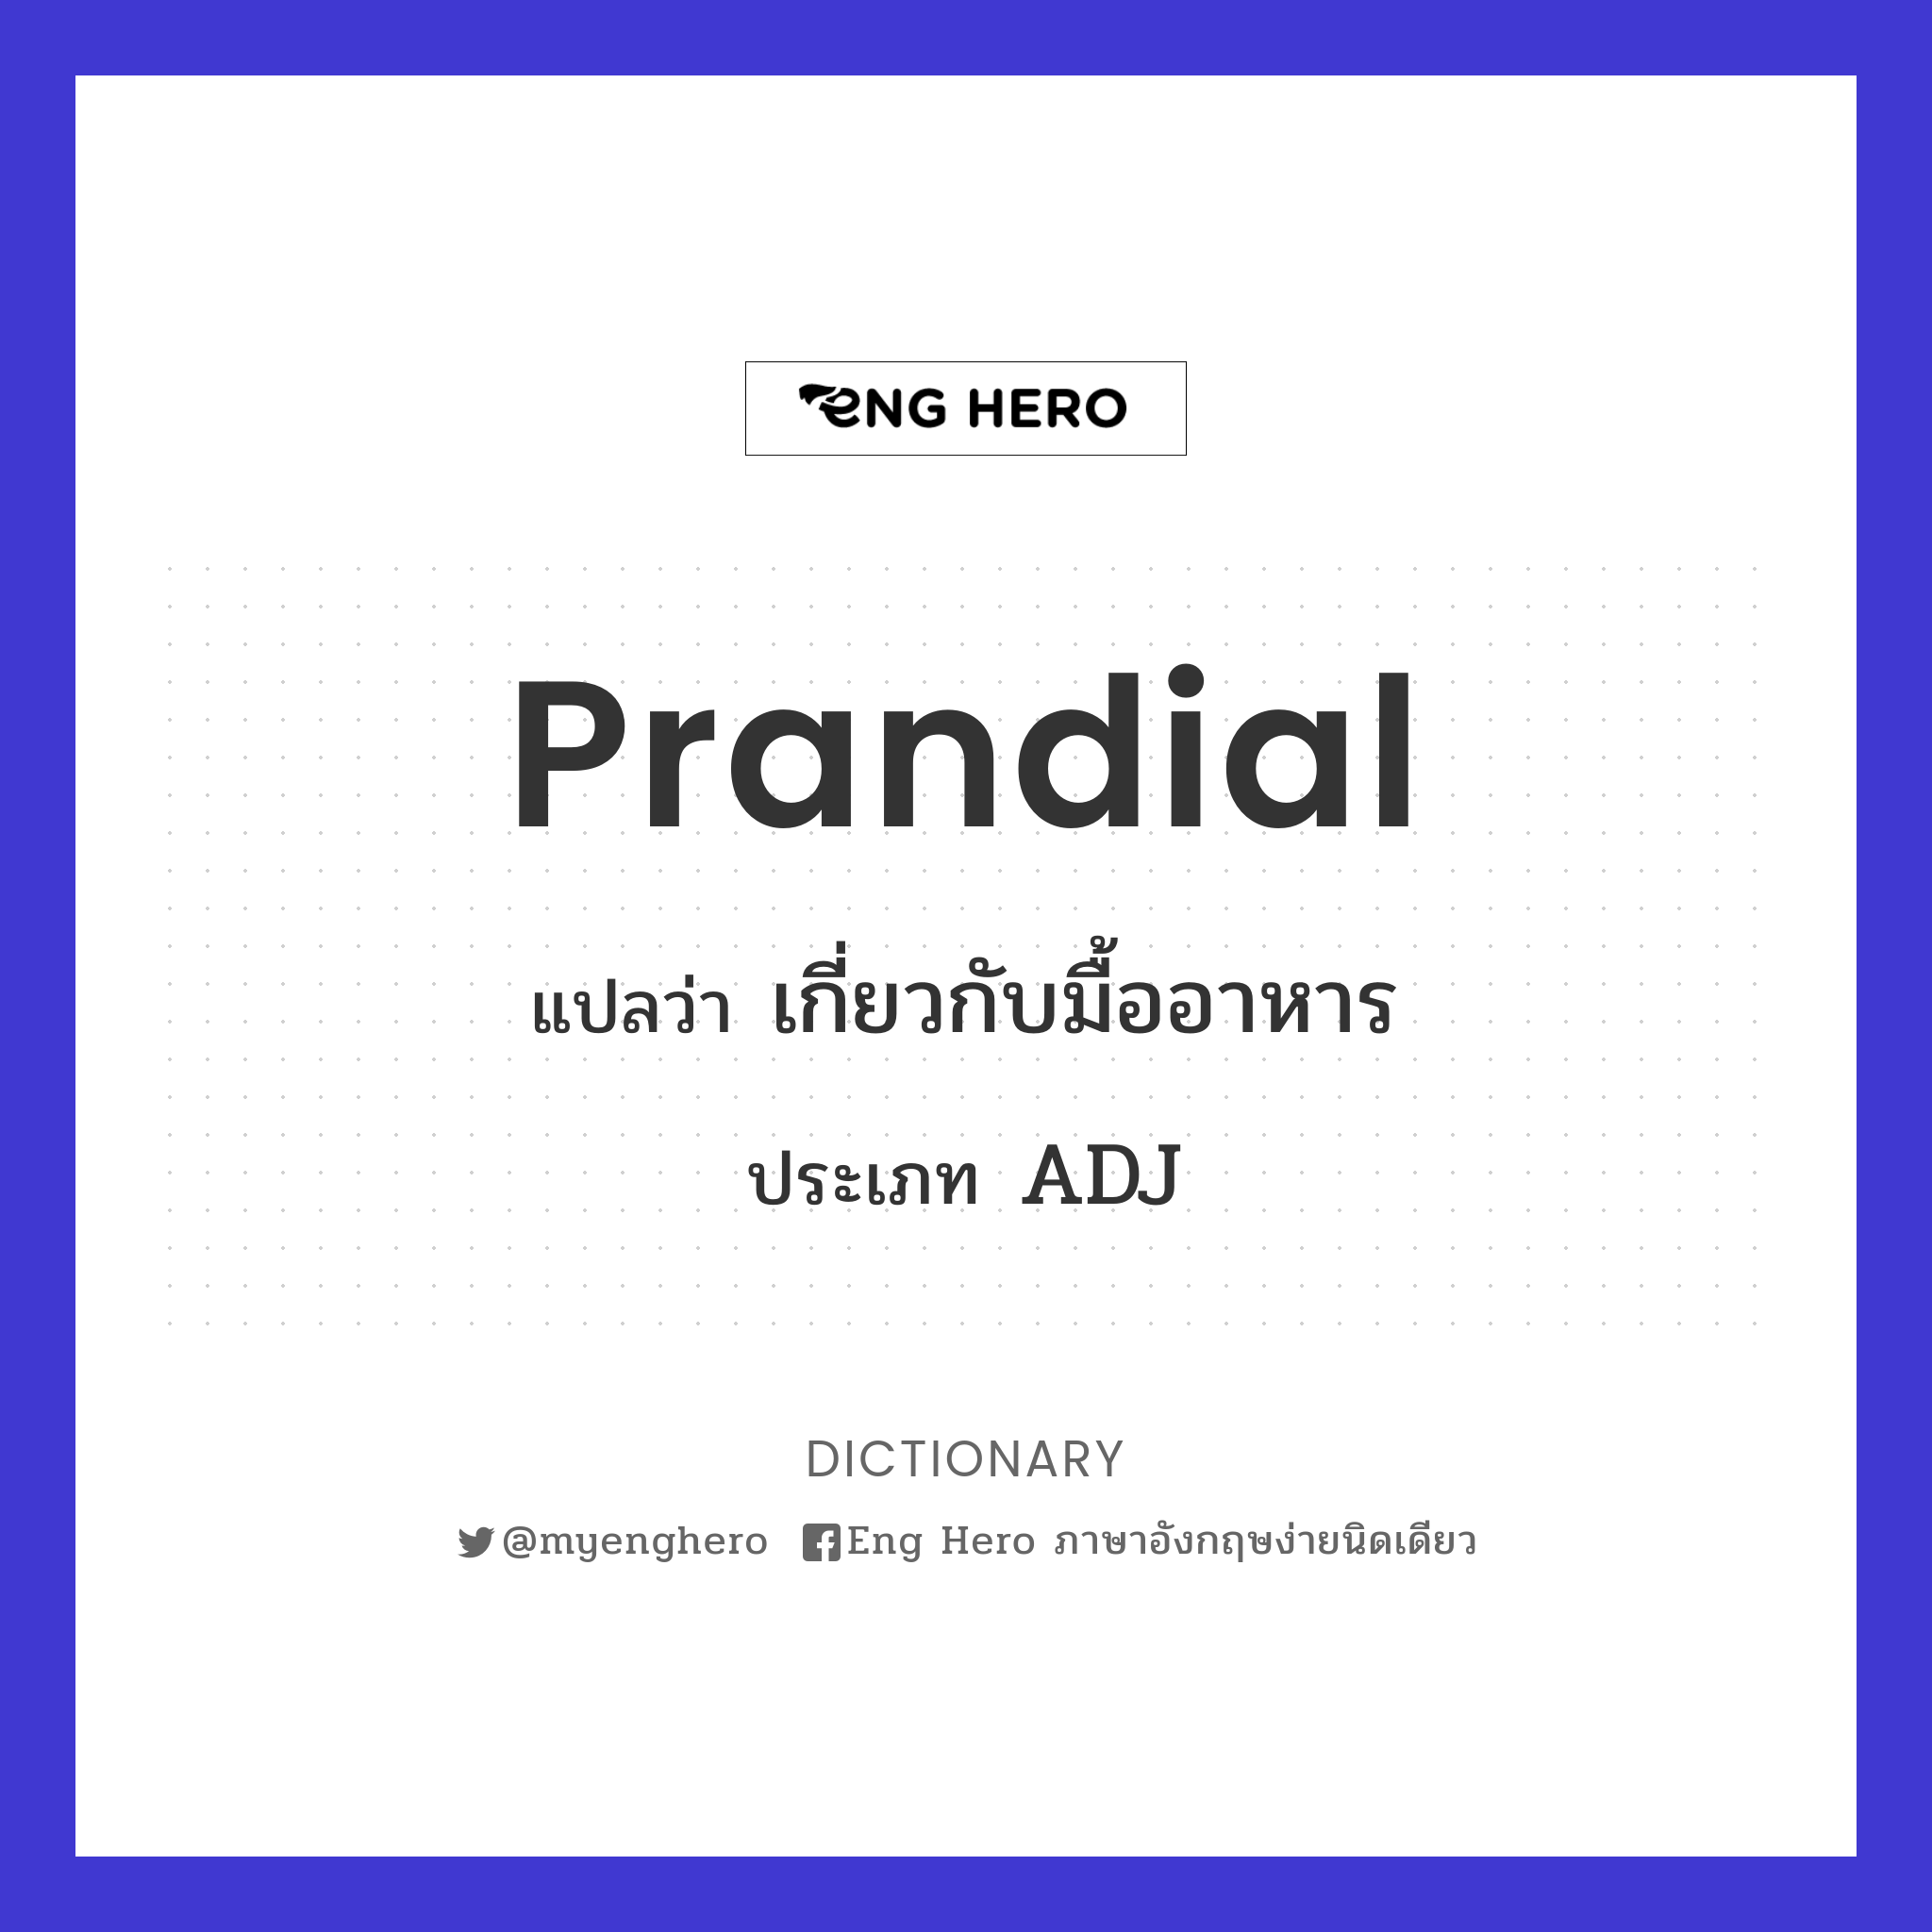 prandial